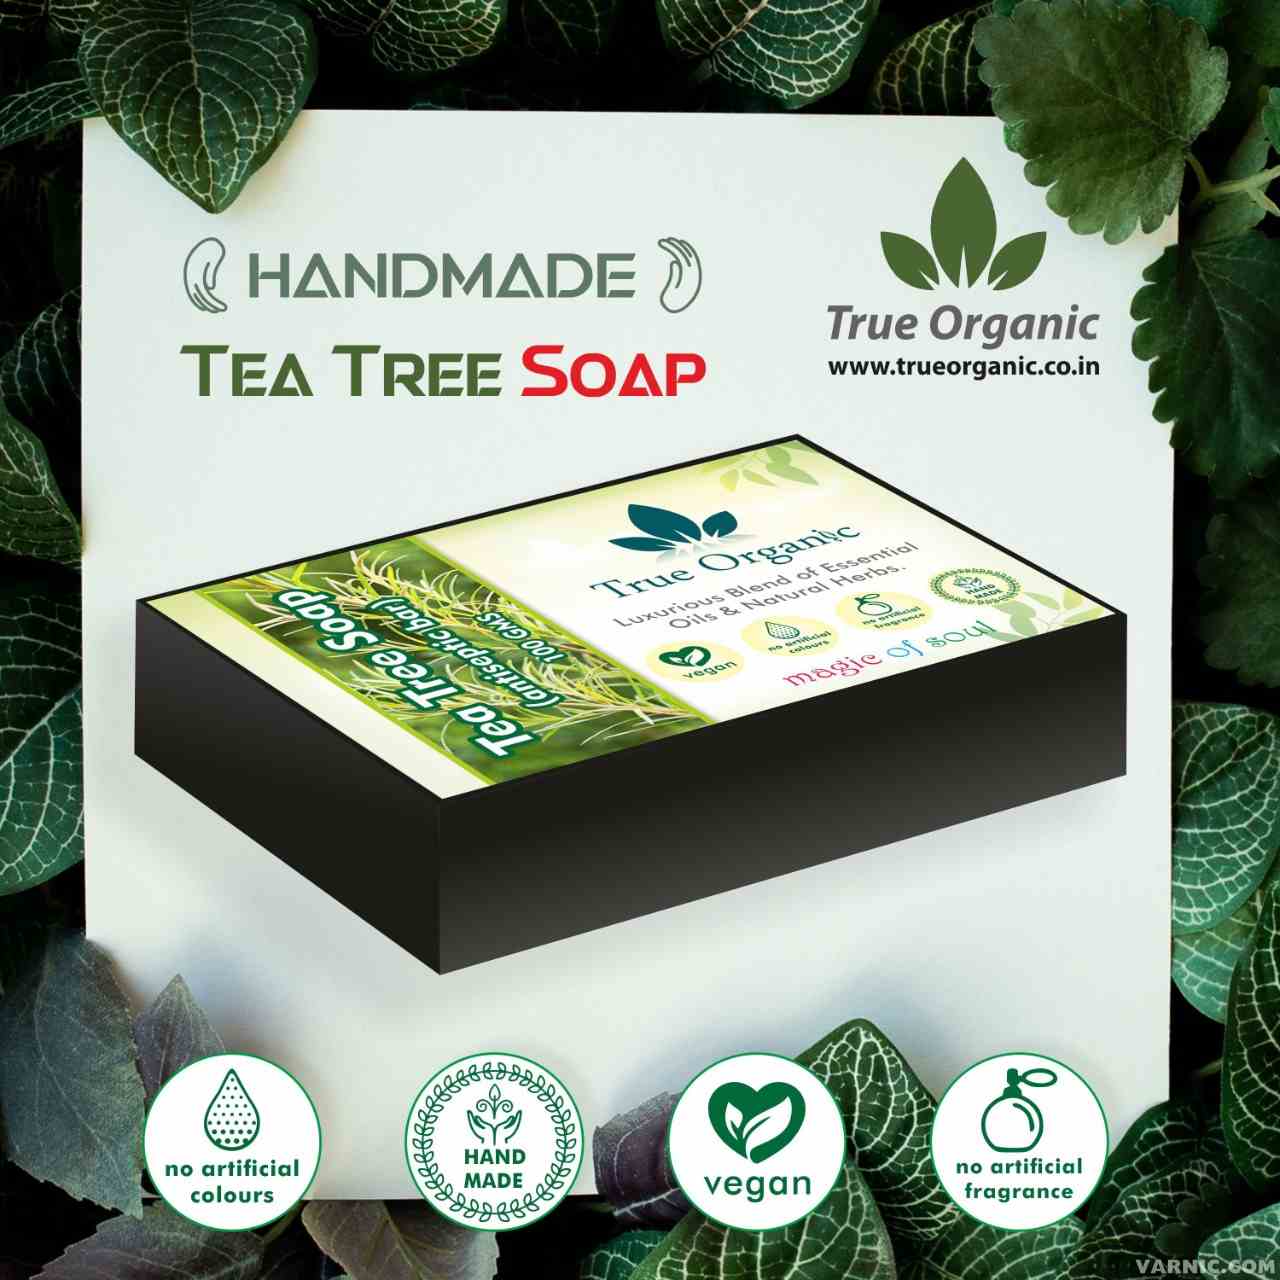 True Organic Tea Tree Soap